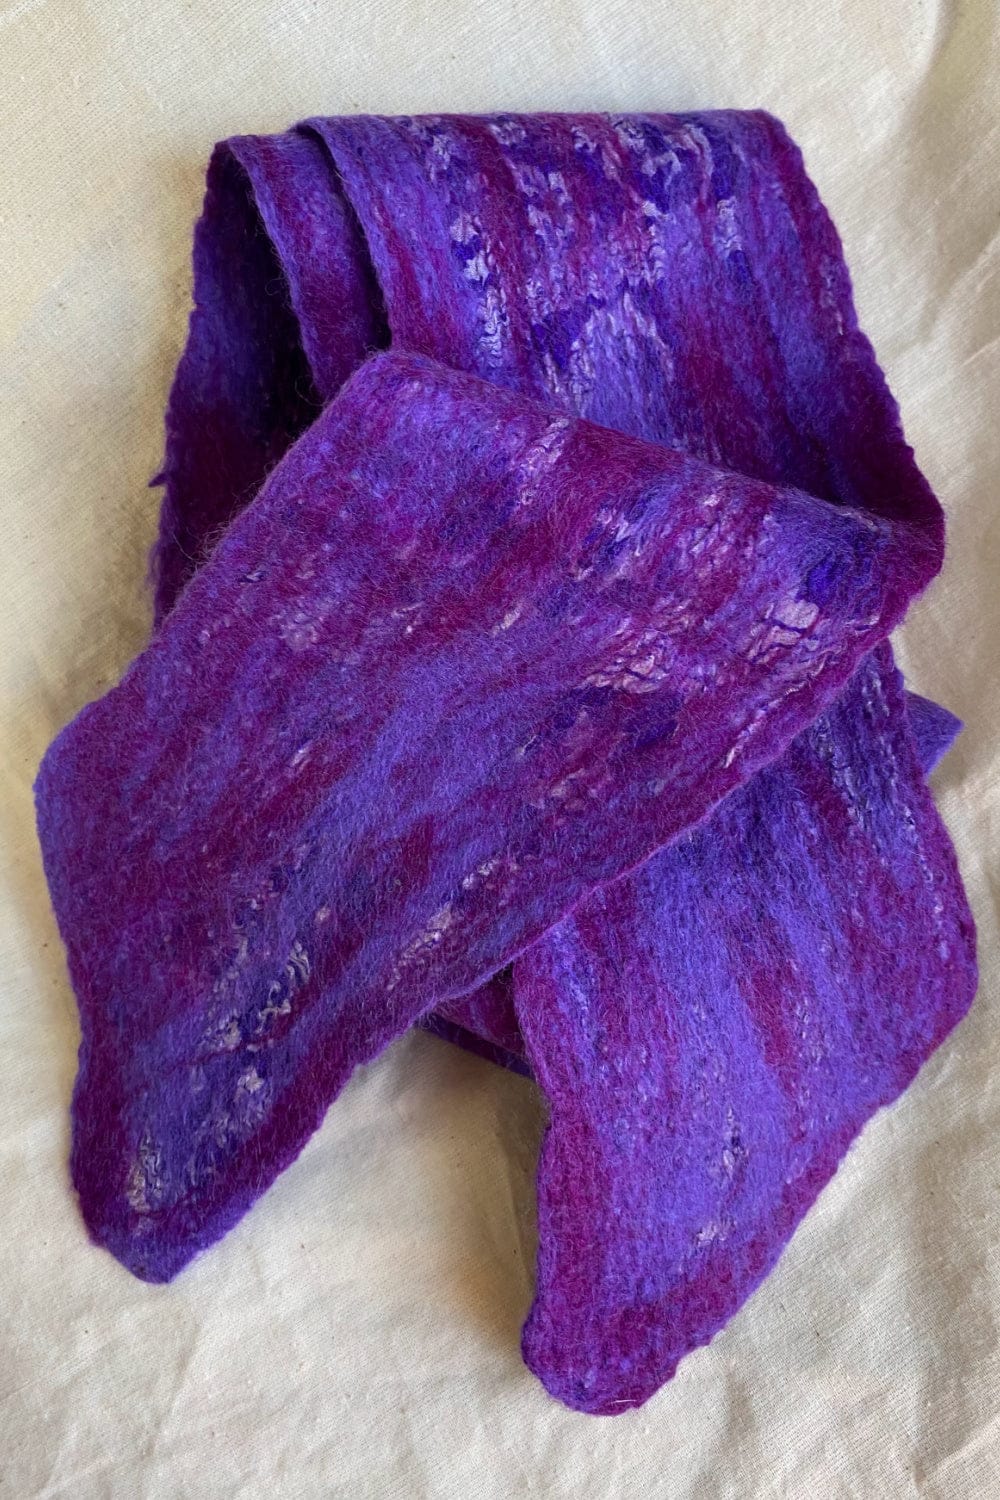 Sari head scarf in a blend of purple felt and vintage silks.